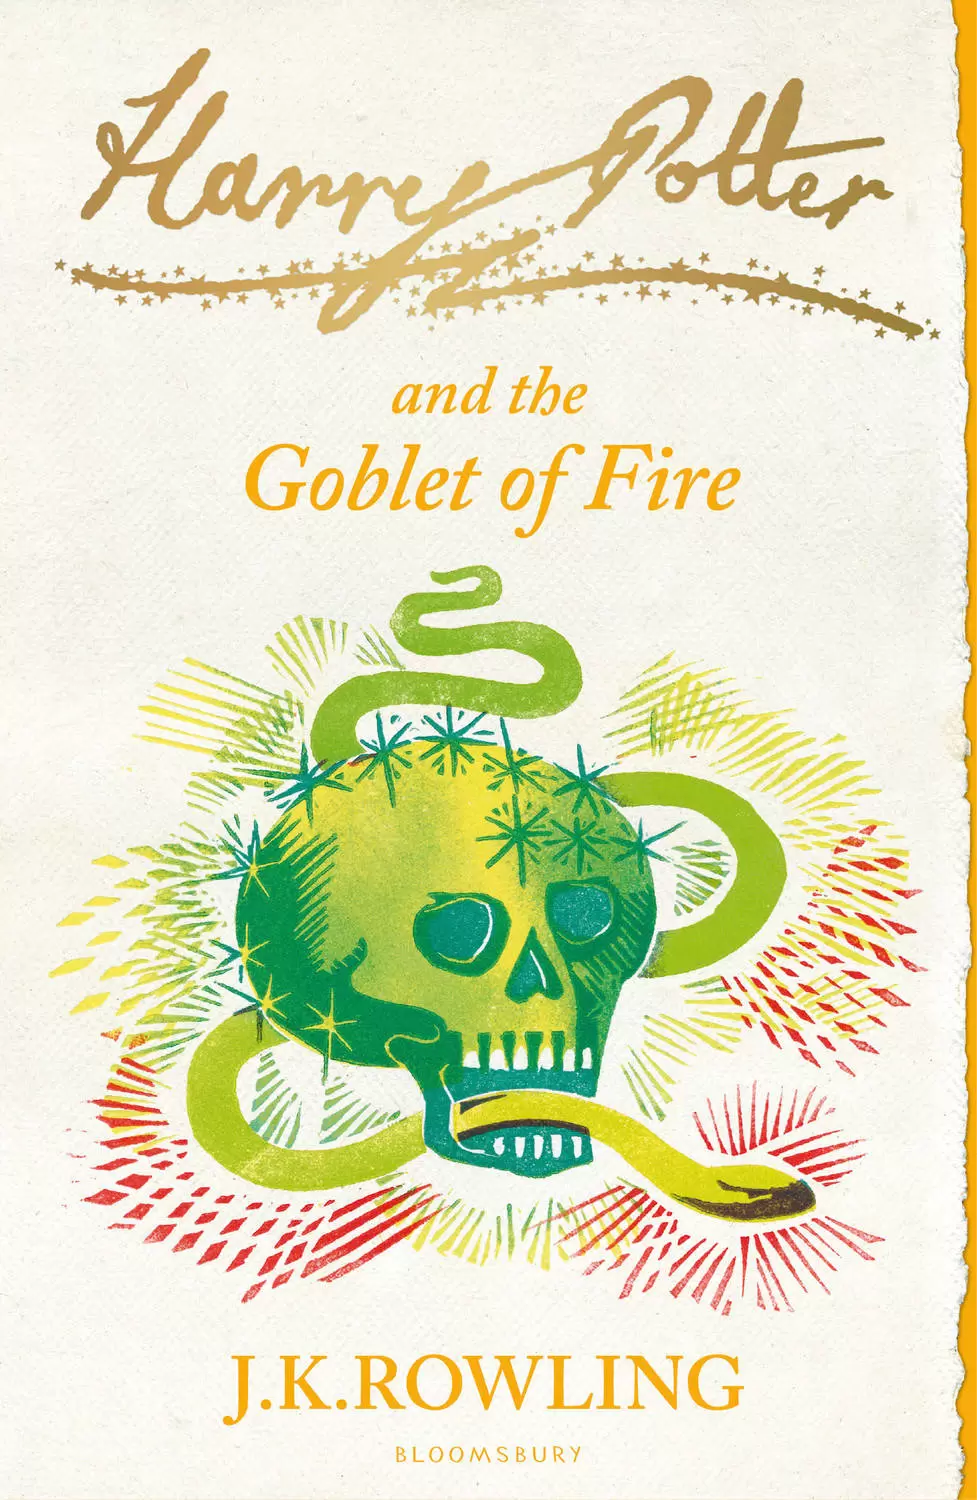 Livres Harry Potter et Animaux Fantastiques - Harry Potter and the Goblet of Fire